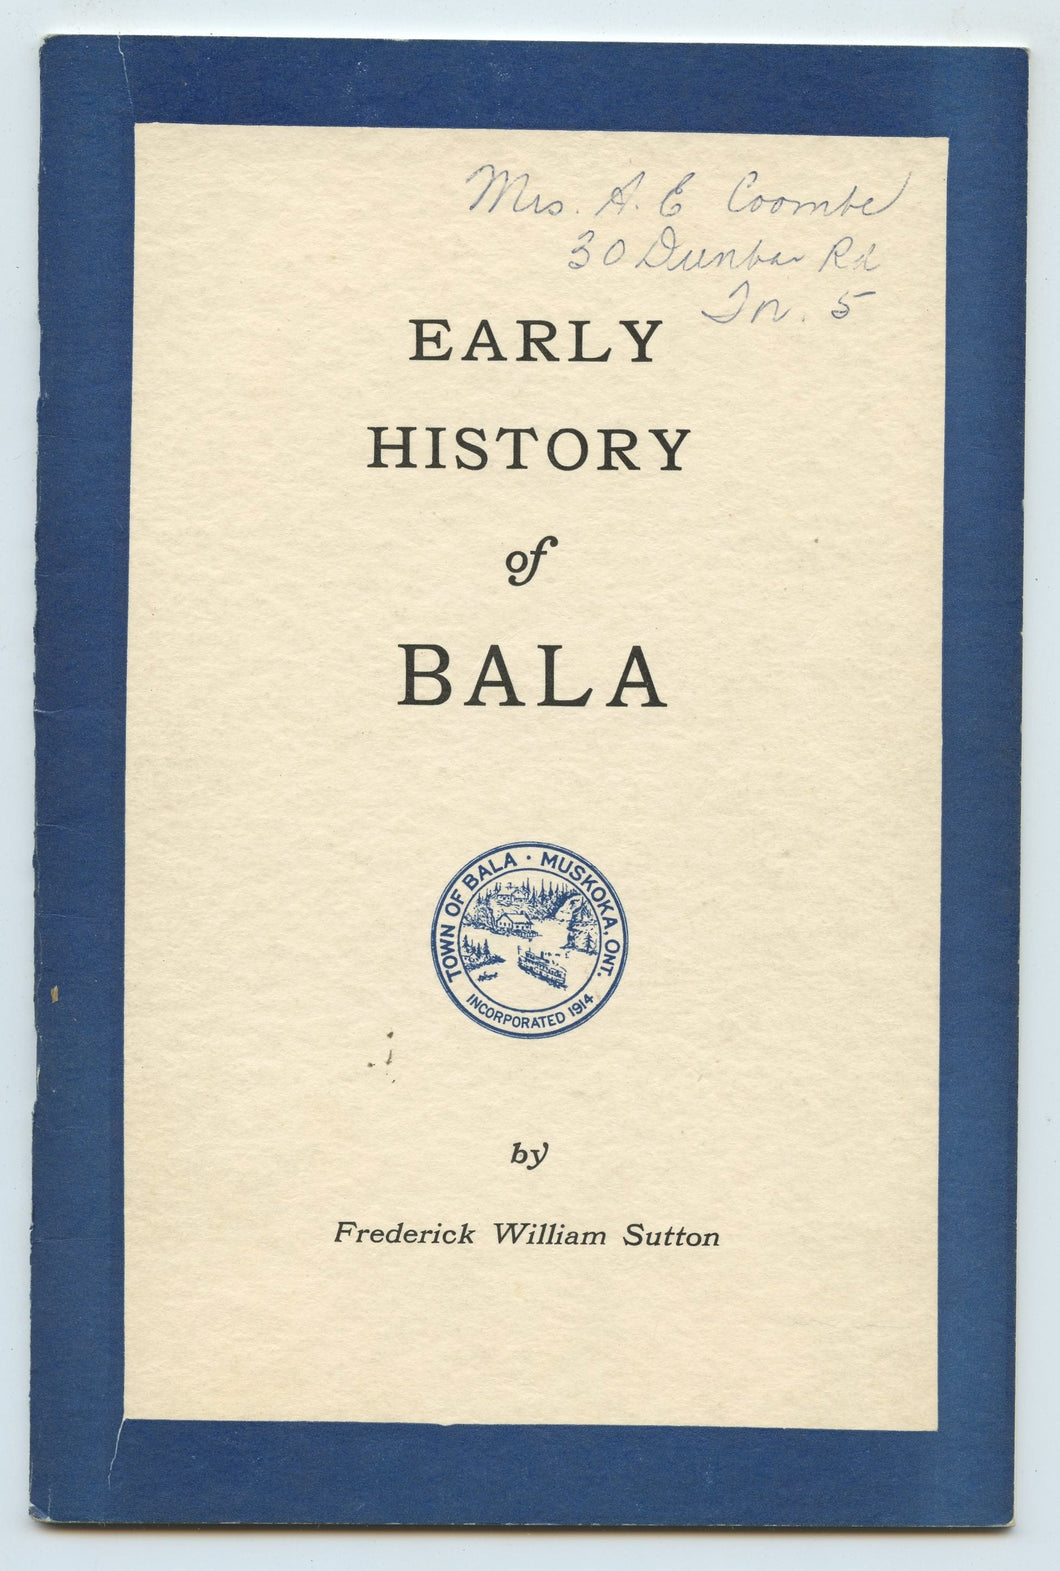 Early History of Bala